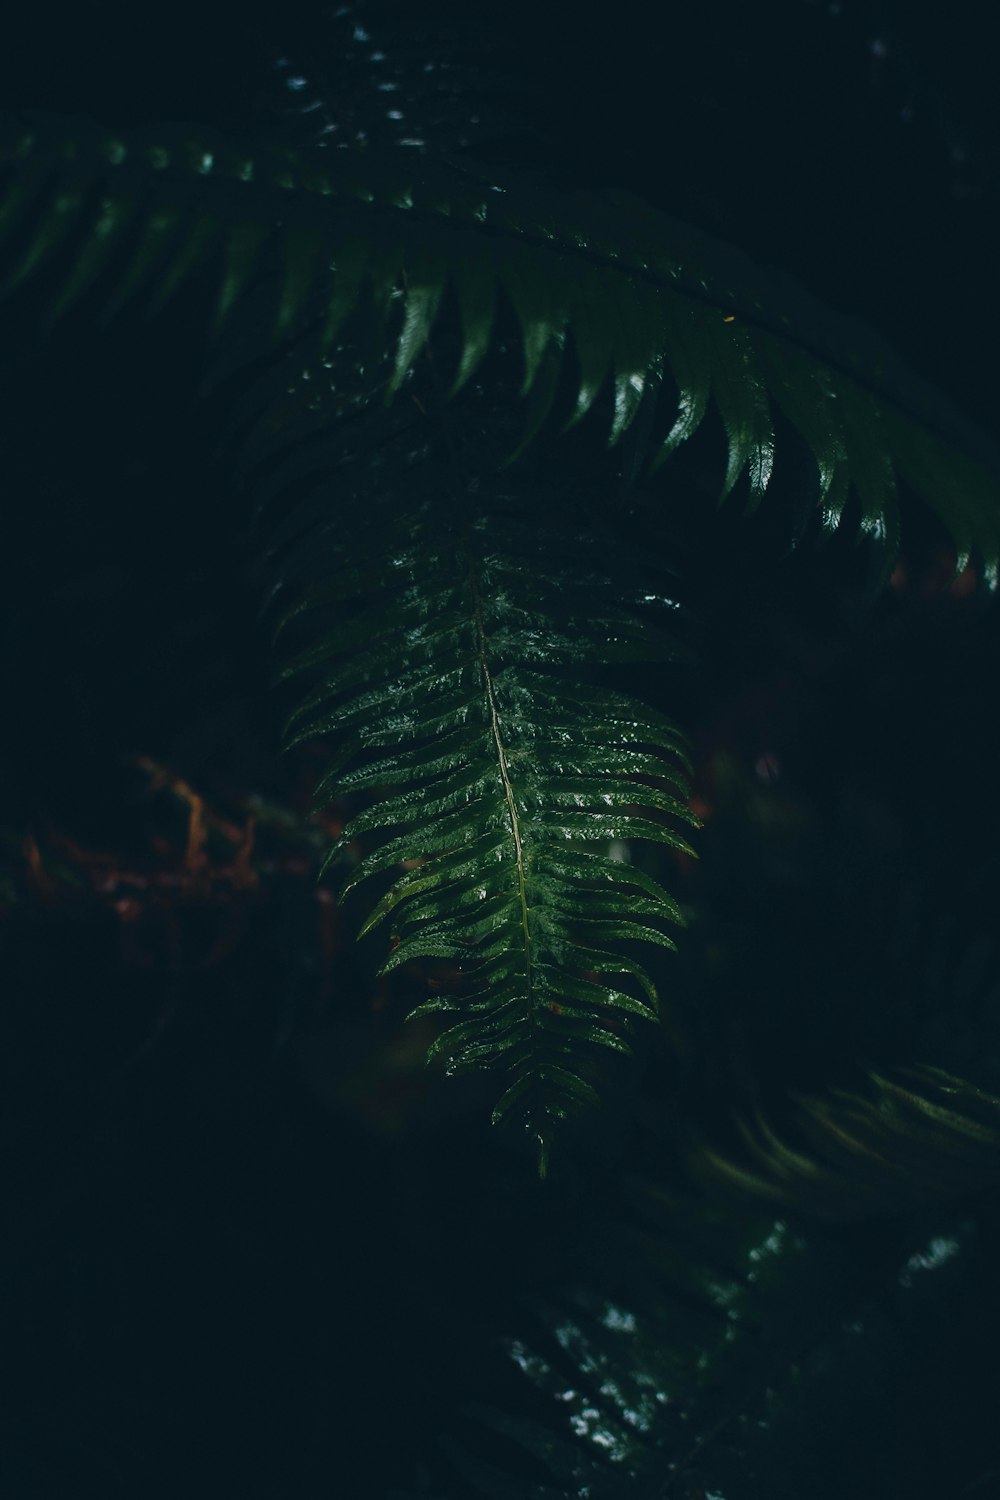 a close up of a green leaf in the dark